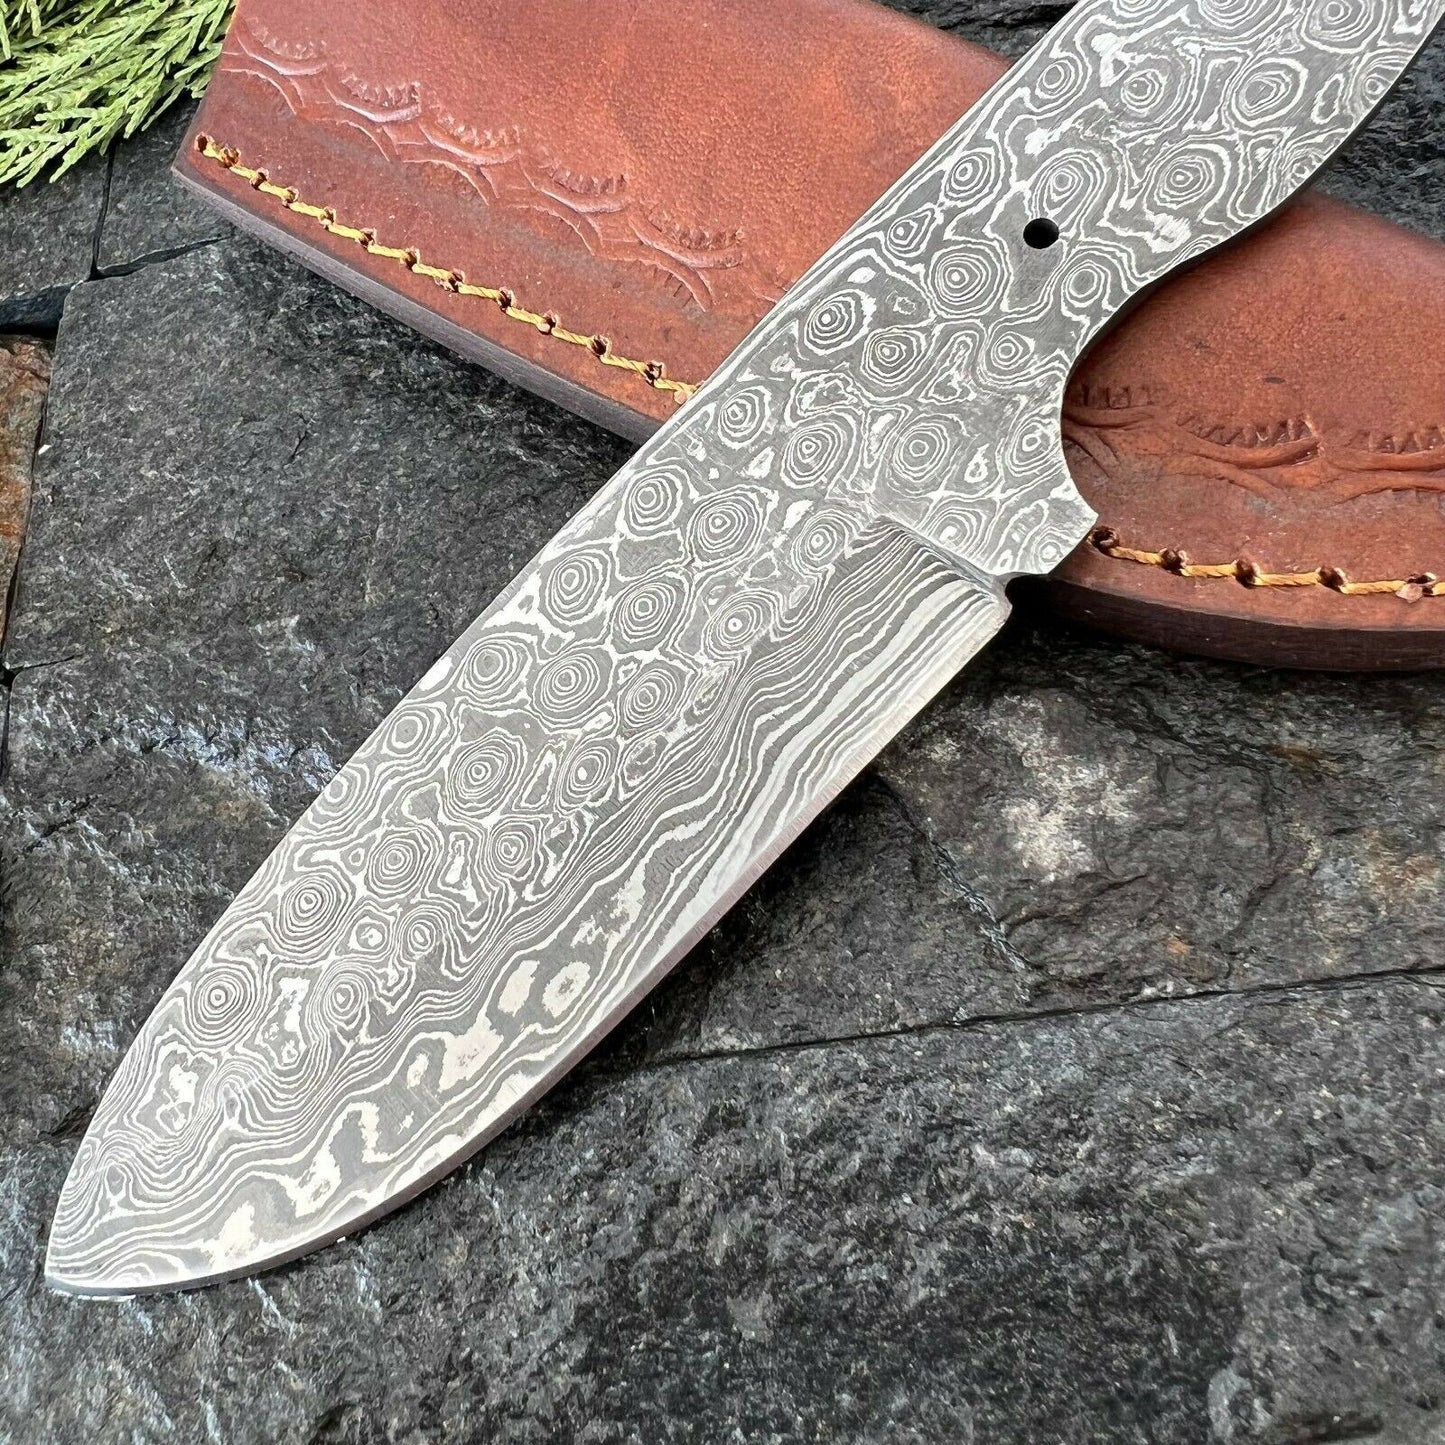 SHARDBLADE Custom Hand Forged Damascus Steel Hunting Skinner Blank Blade knife